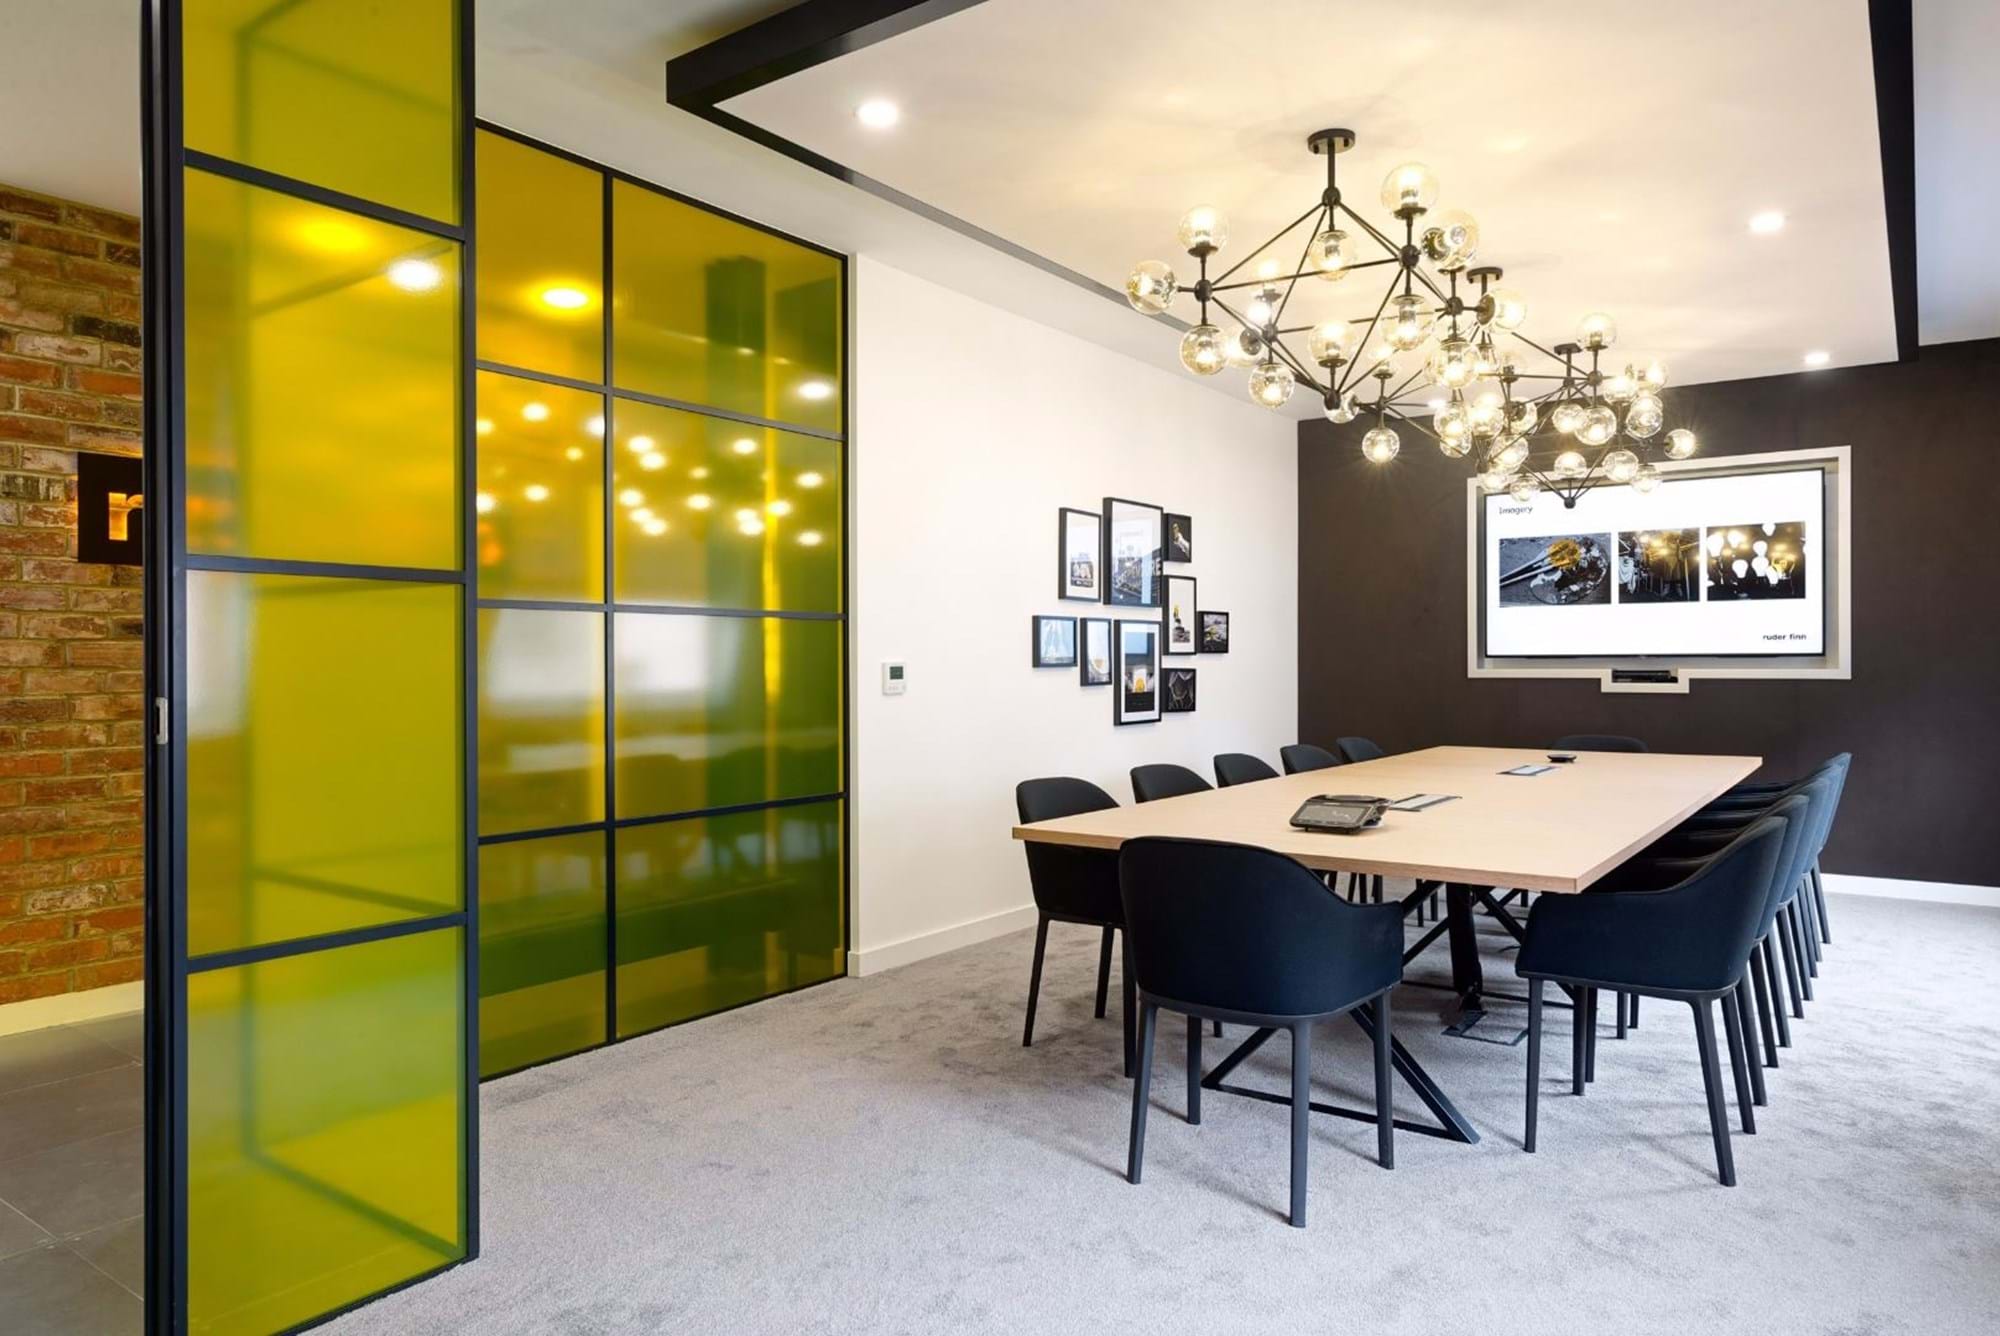 Modus Workspace office design, fit out and refurbishment - Ruderfinn - Ruder Finn 02 highres sRGB.jpg